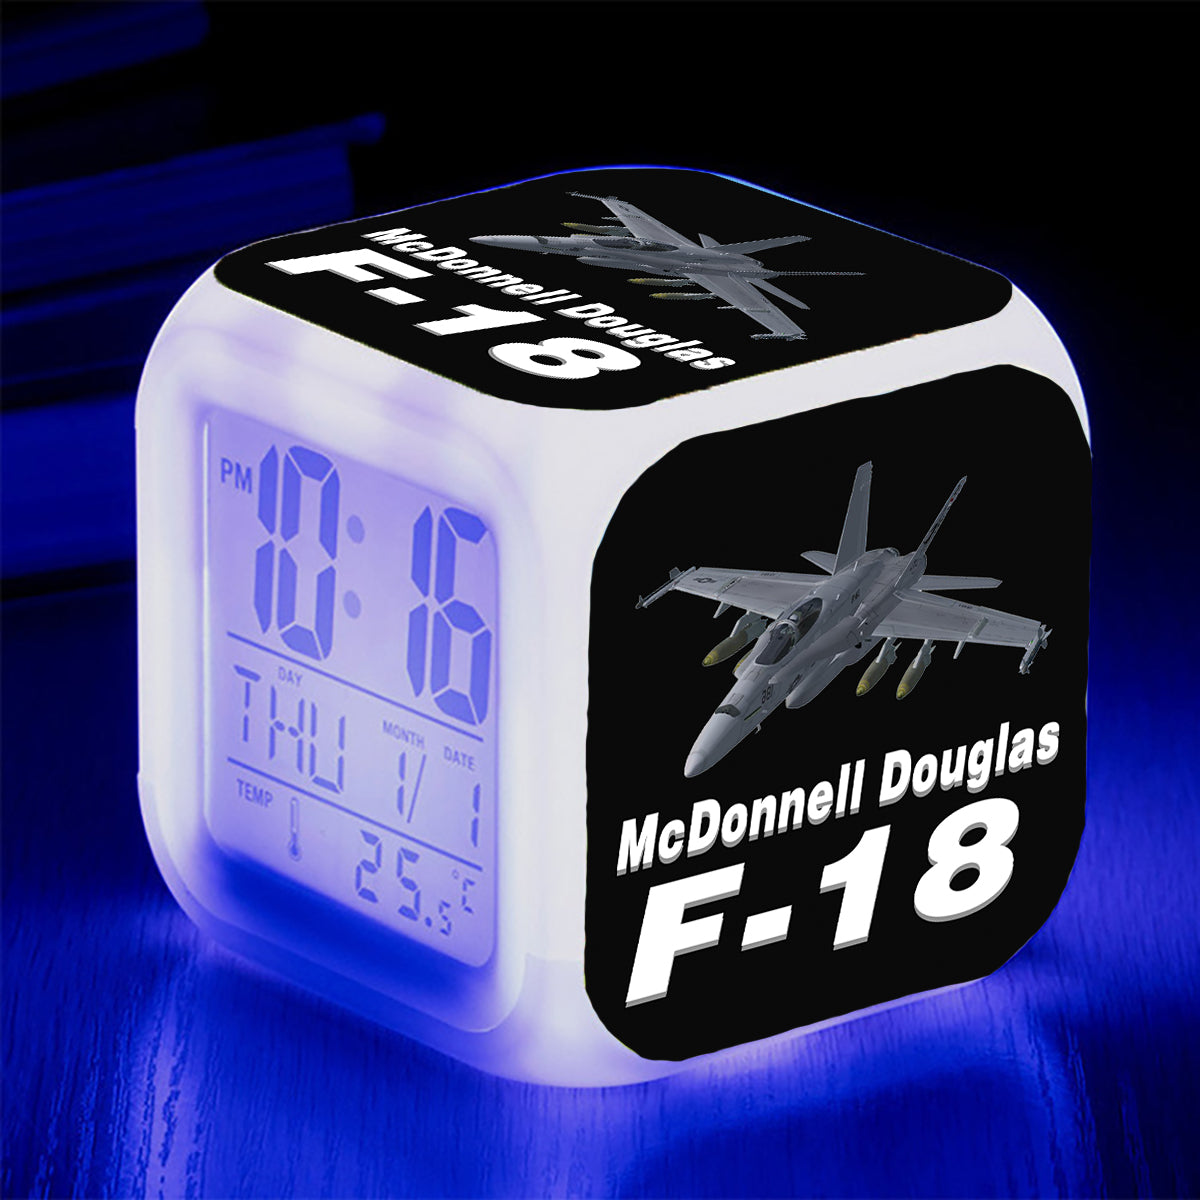 The McDonnell Douglas F18 Designed "7 Colour" Digital Alarm Clock